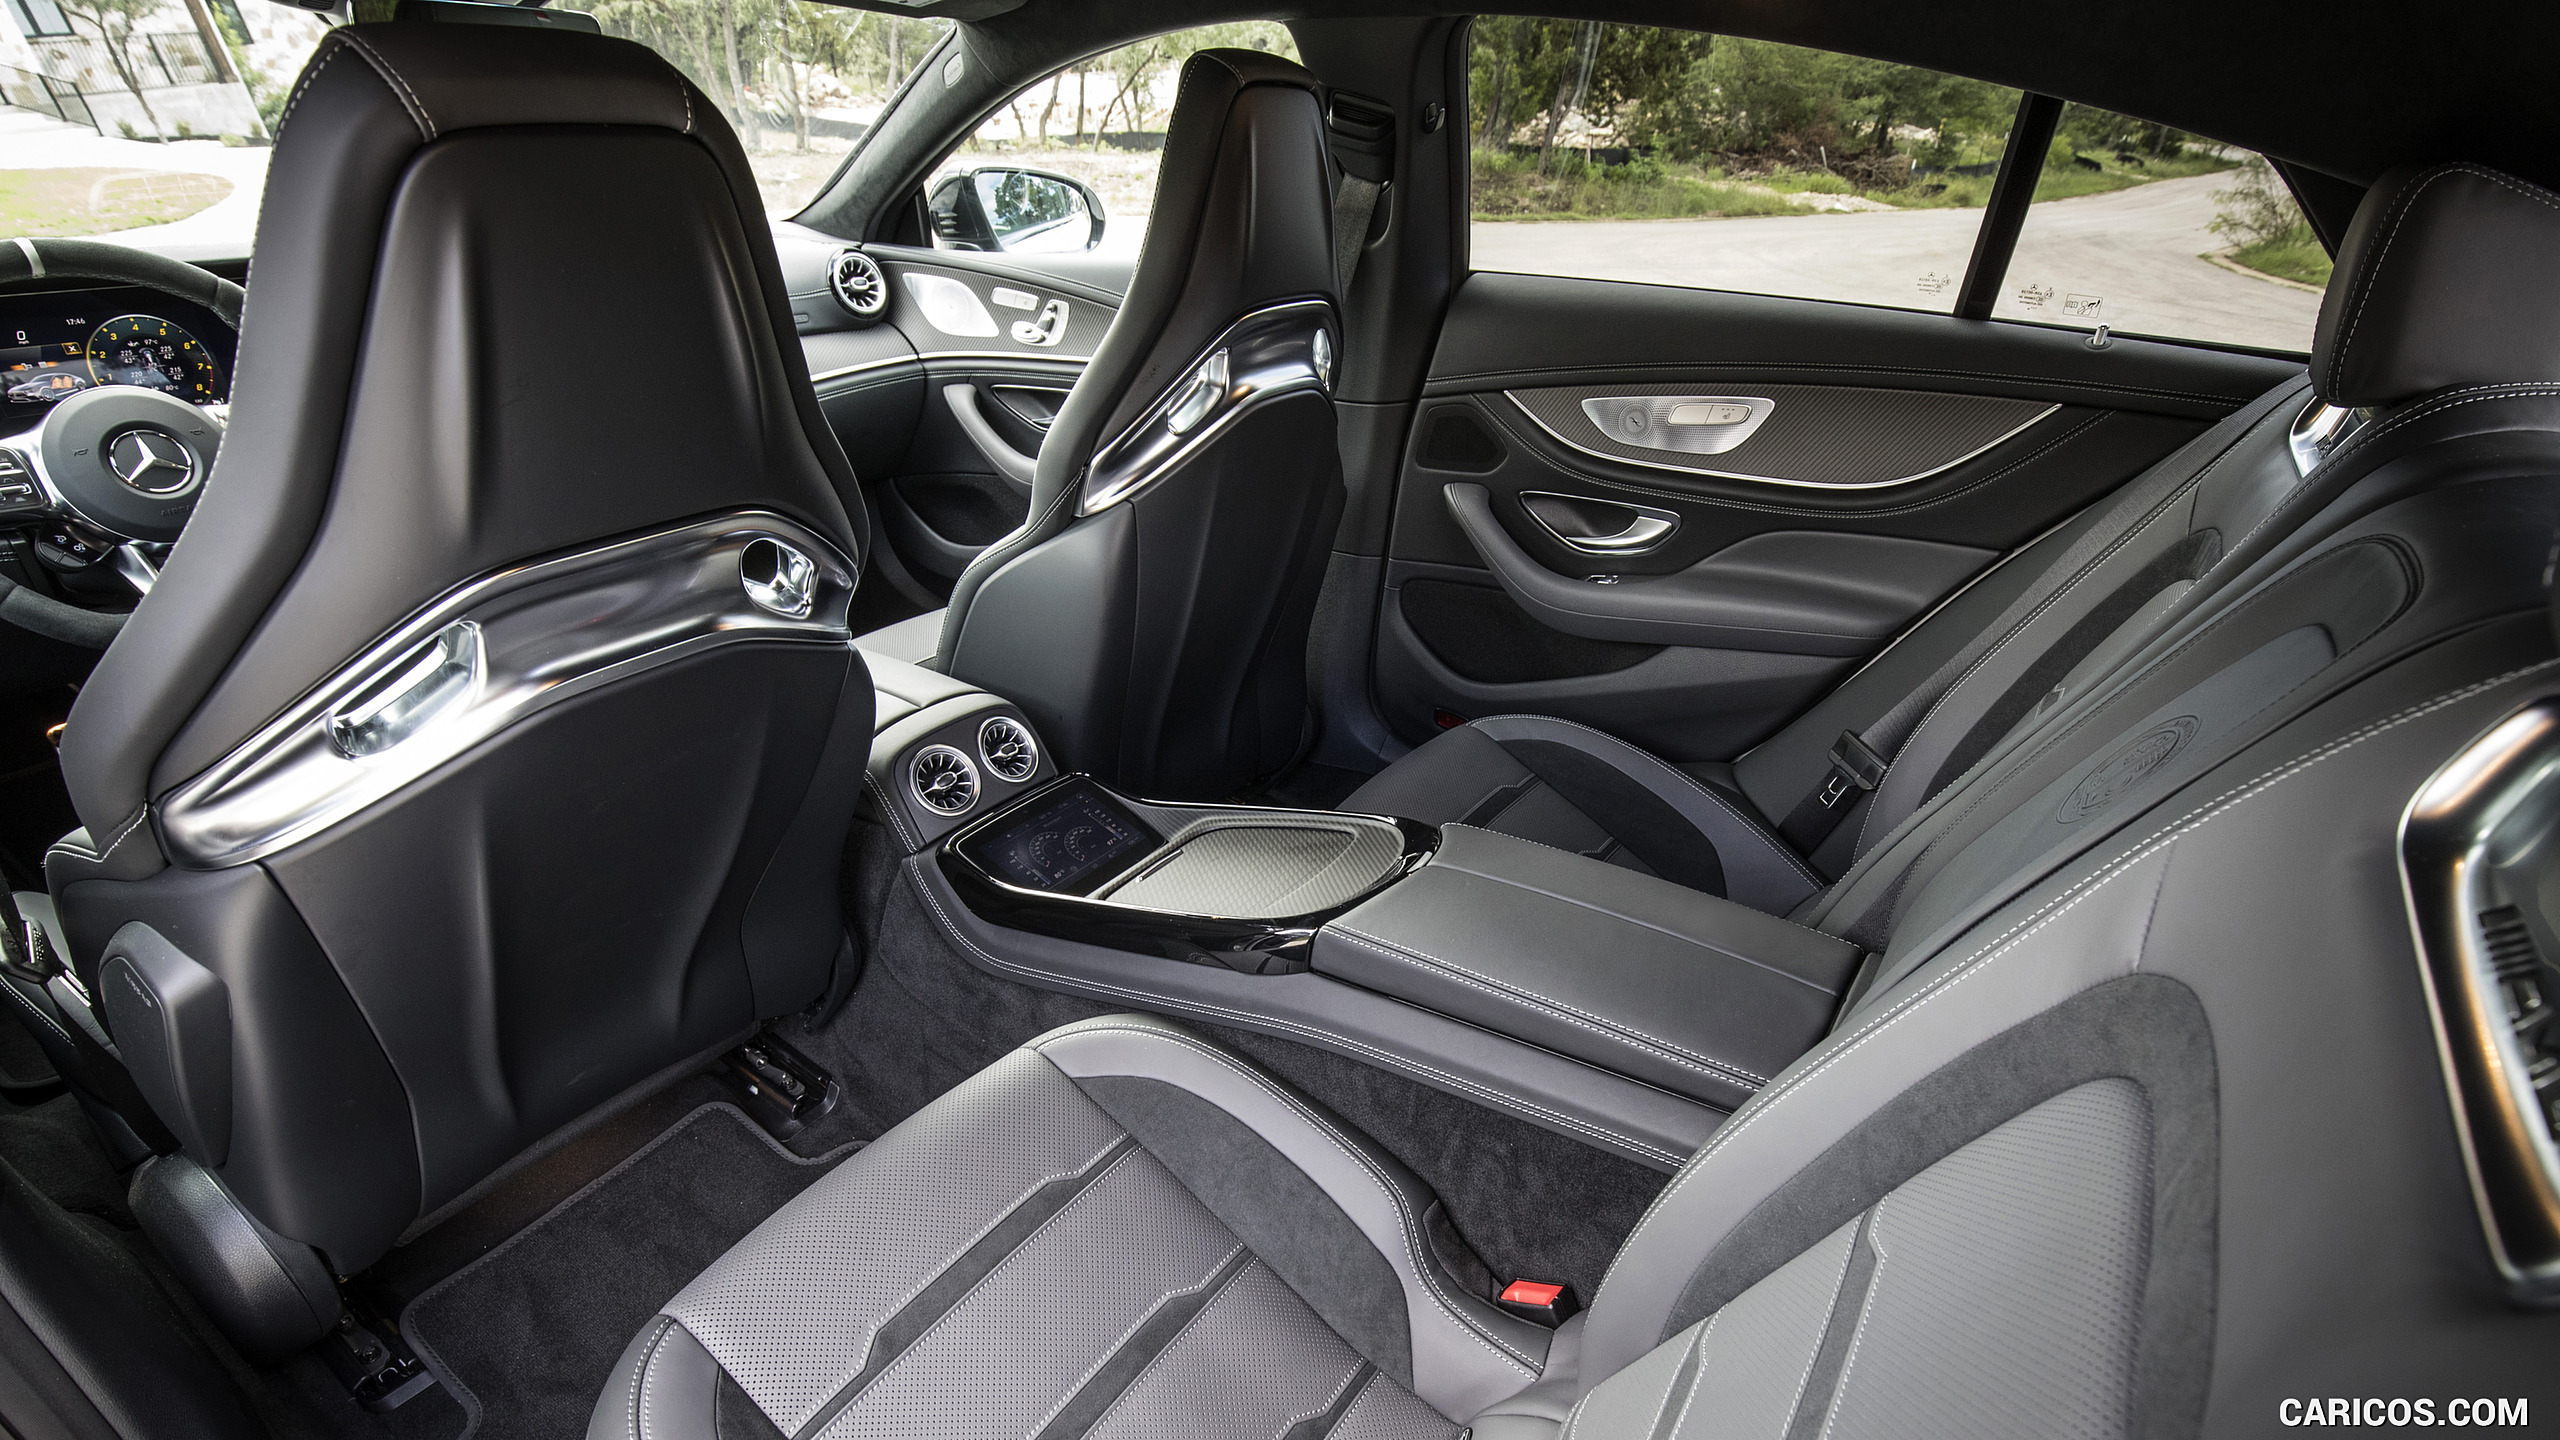 2019 Mercedes-AMG GT 53 4-Door Coupe - Interior, Rear Seats, #283 of 427